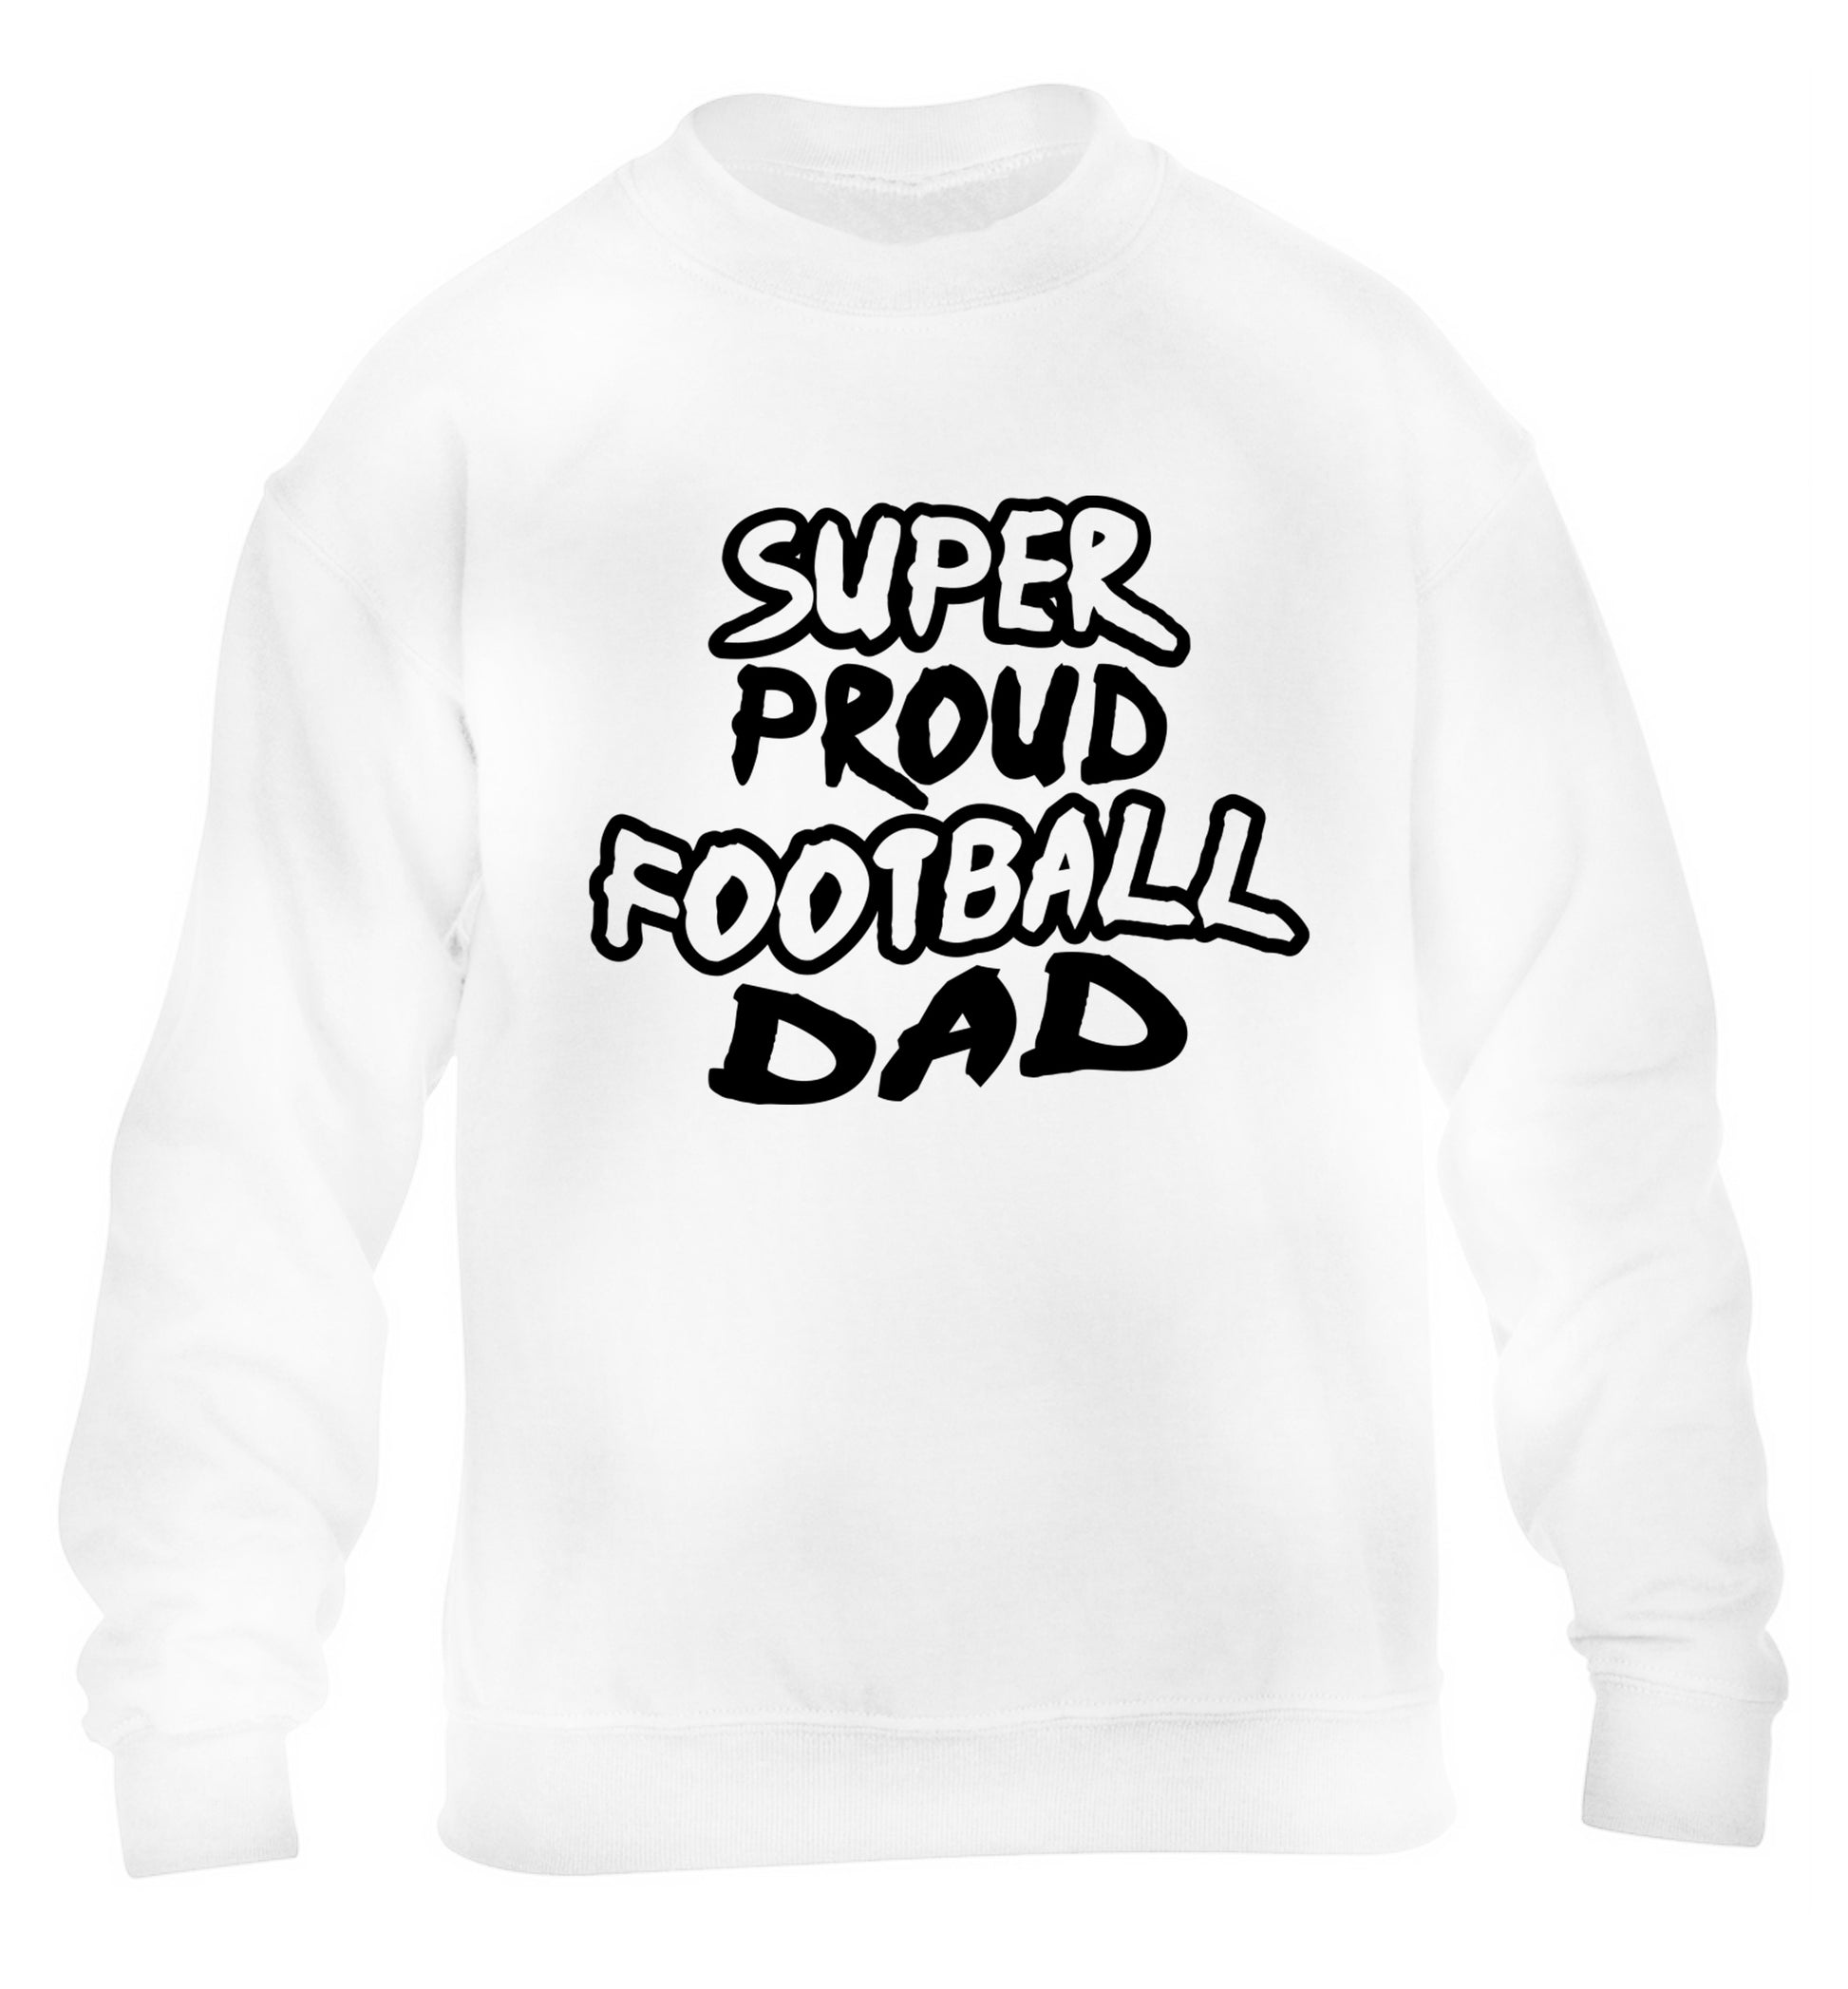 Super proud football dad children's white sweater 12-14 Years